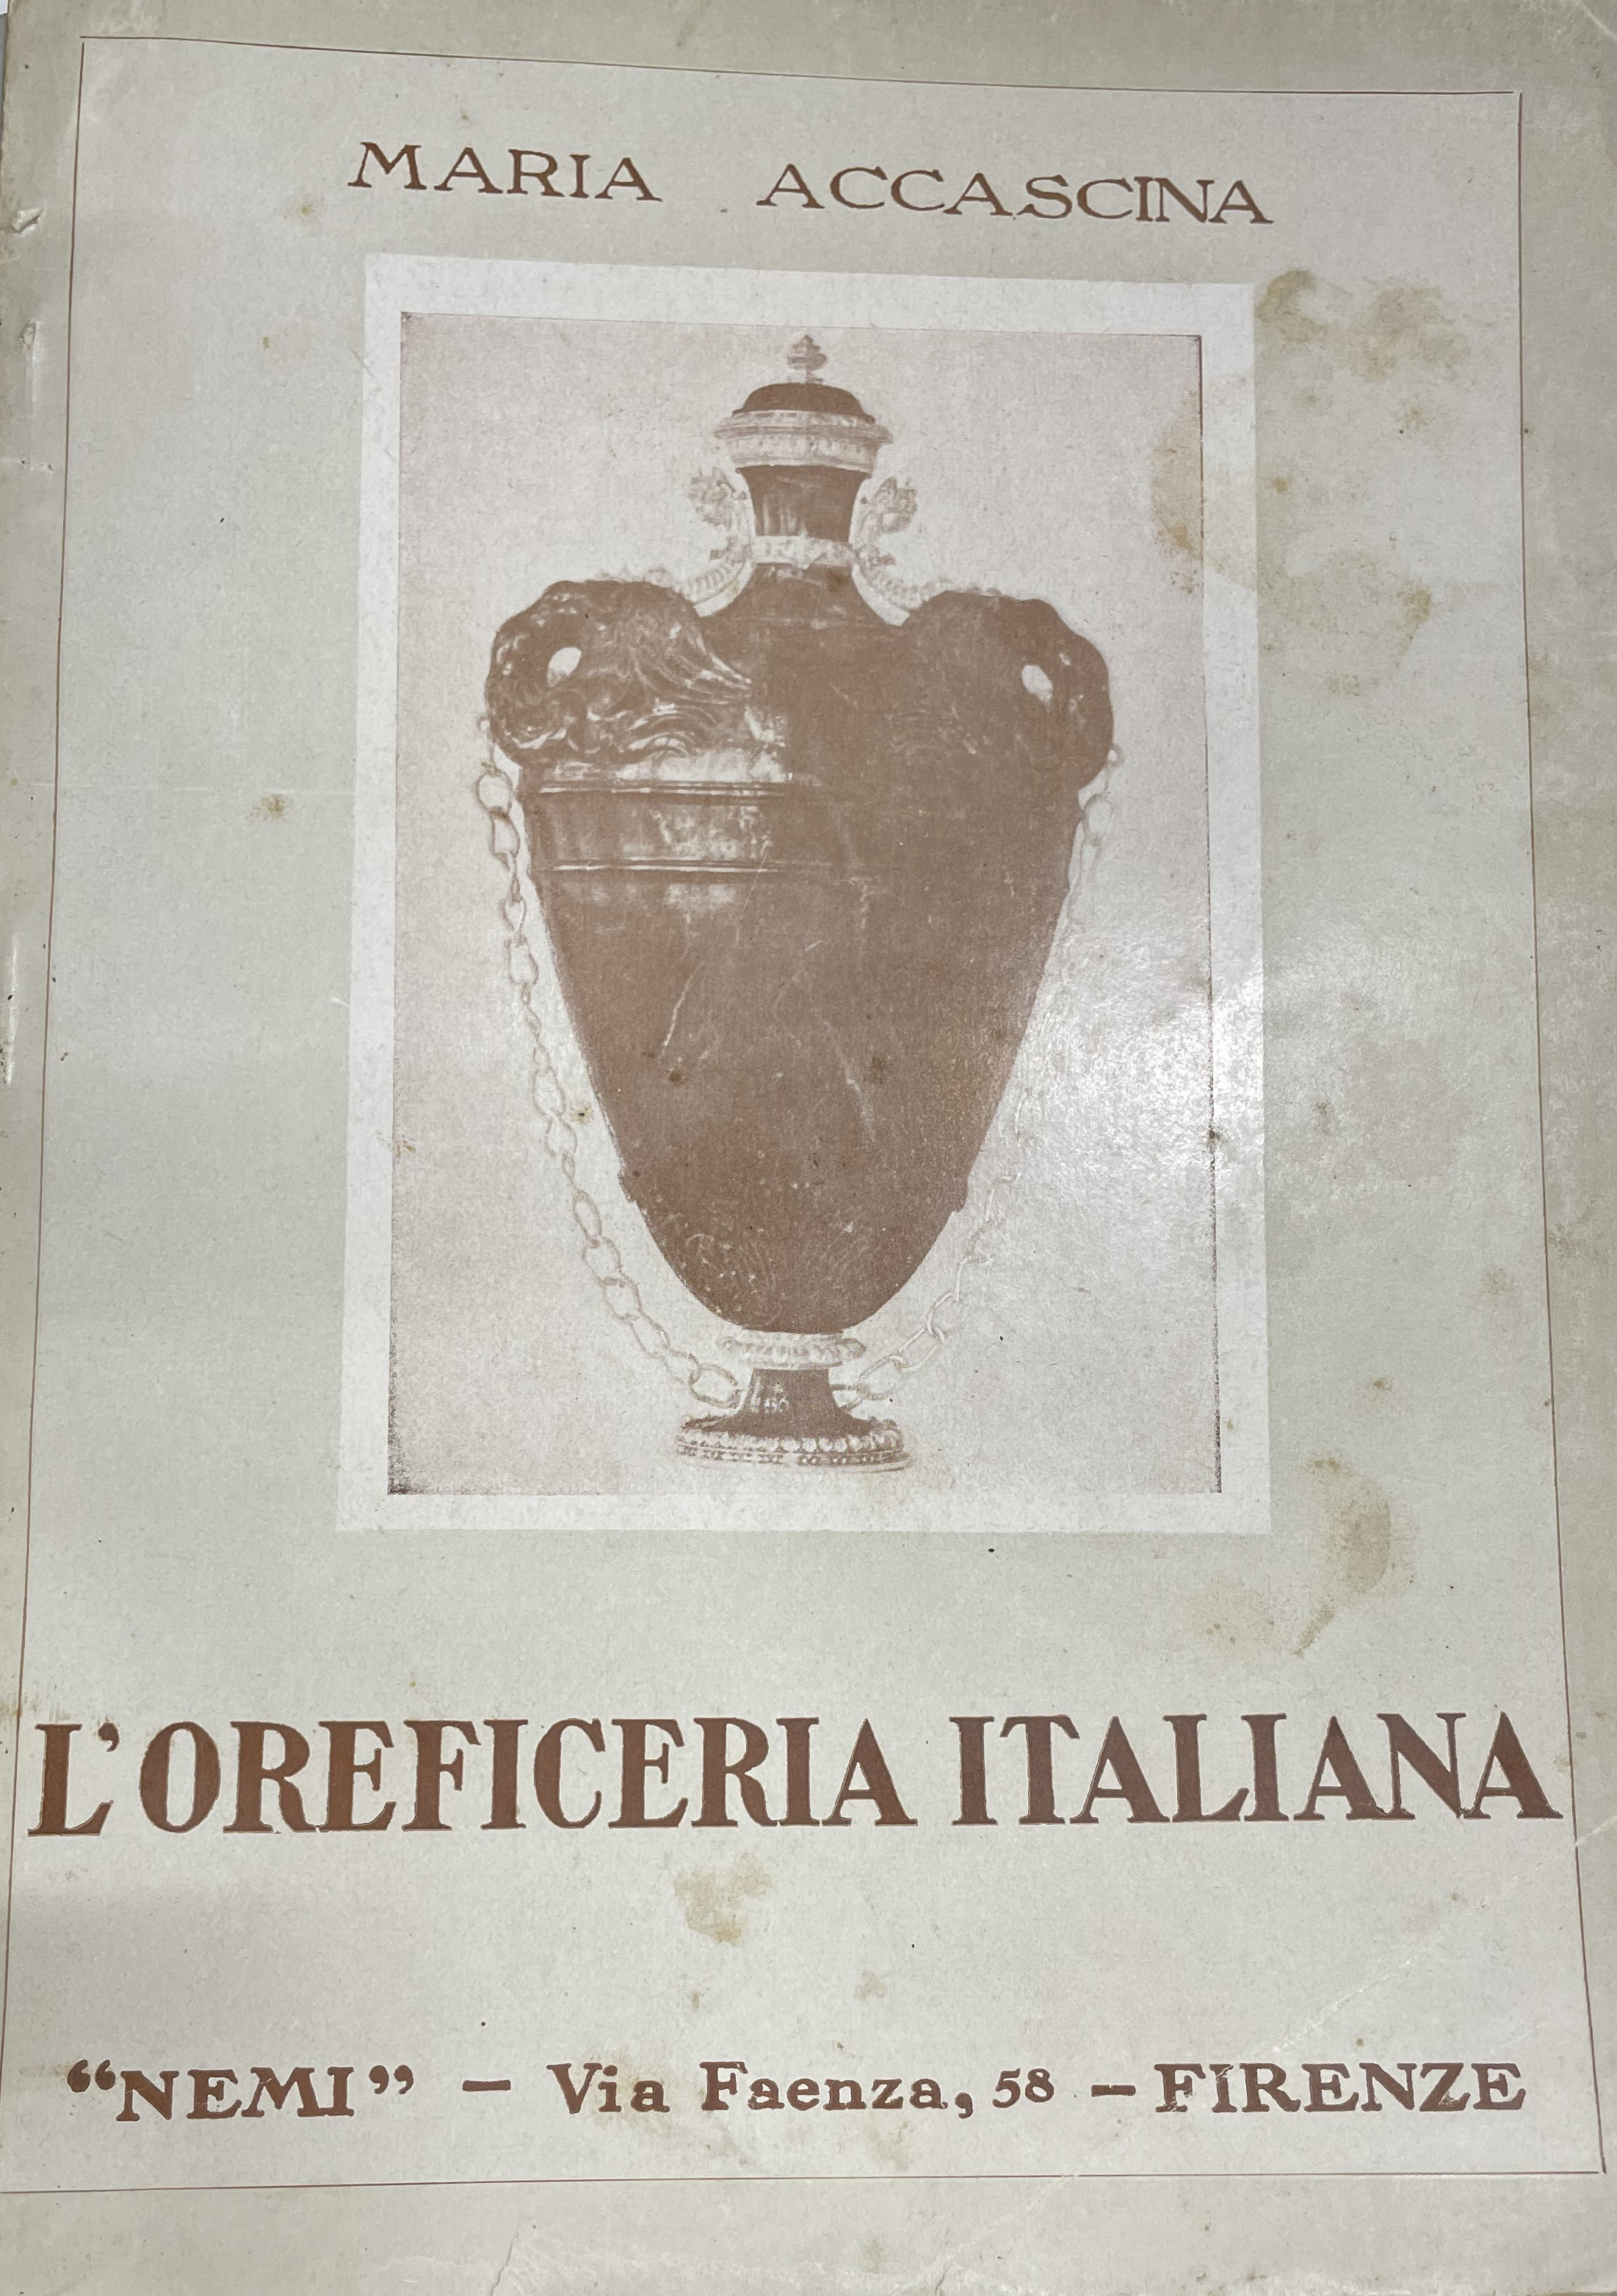 L'oreficeria italiana - [NEMI] - Photo 1/1